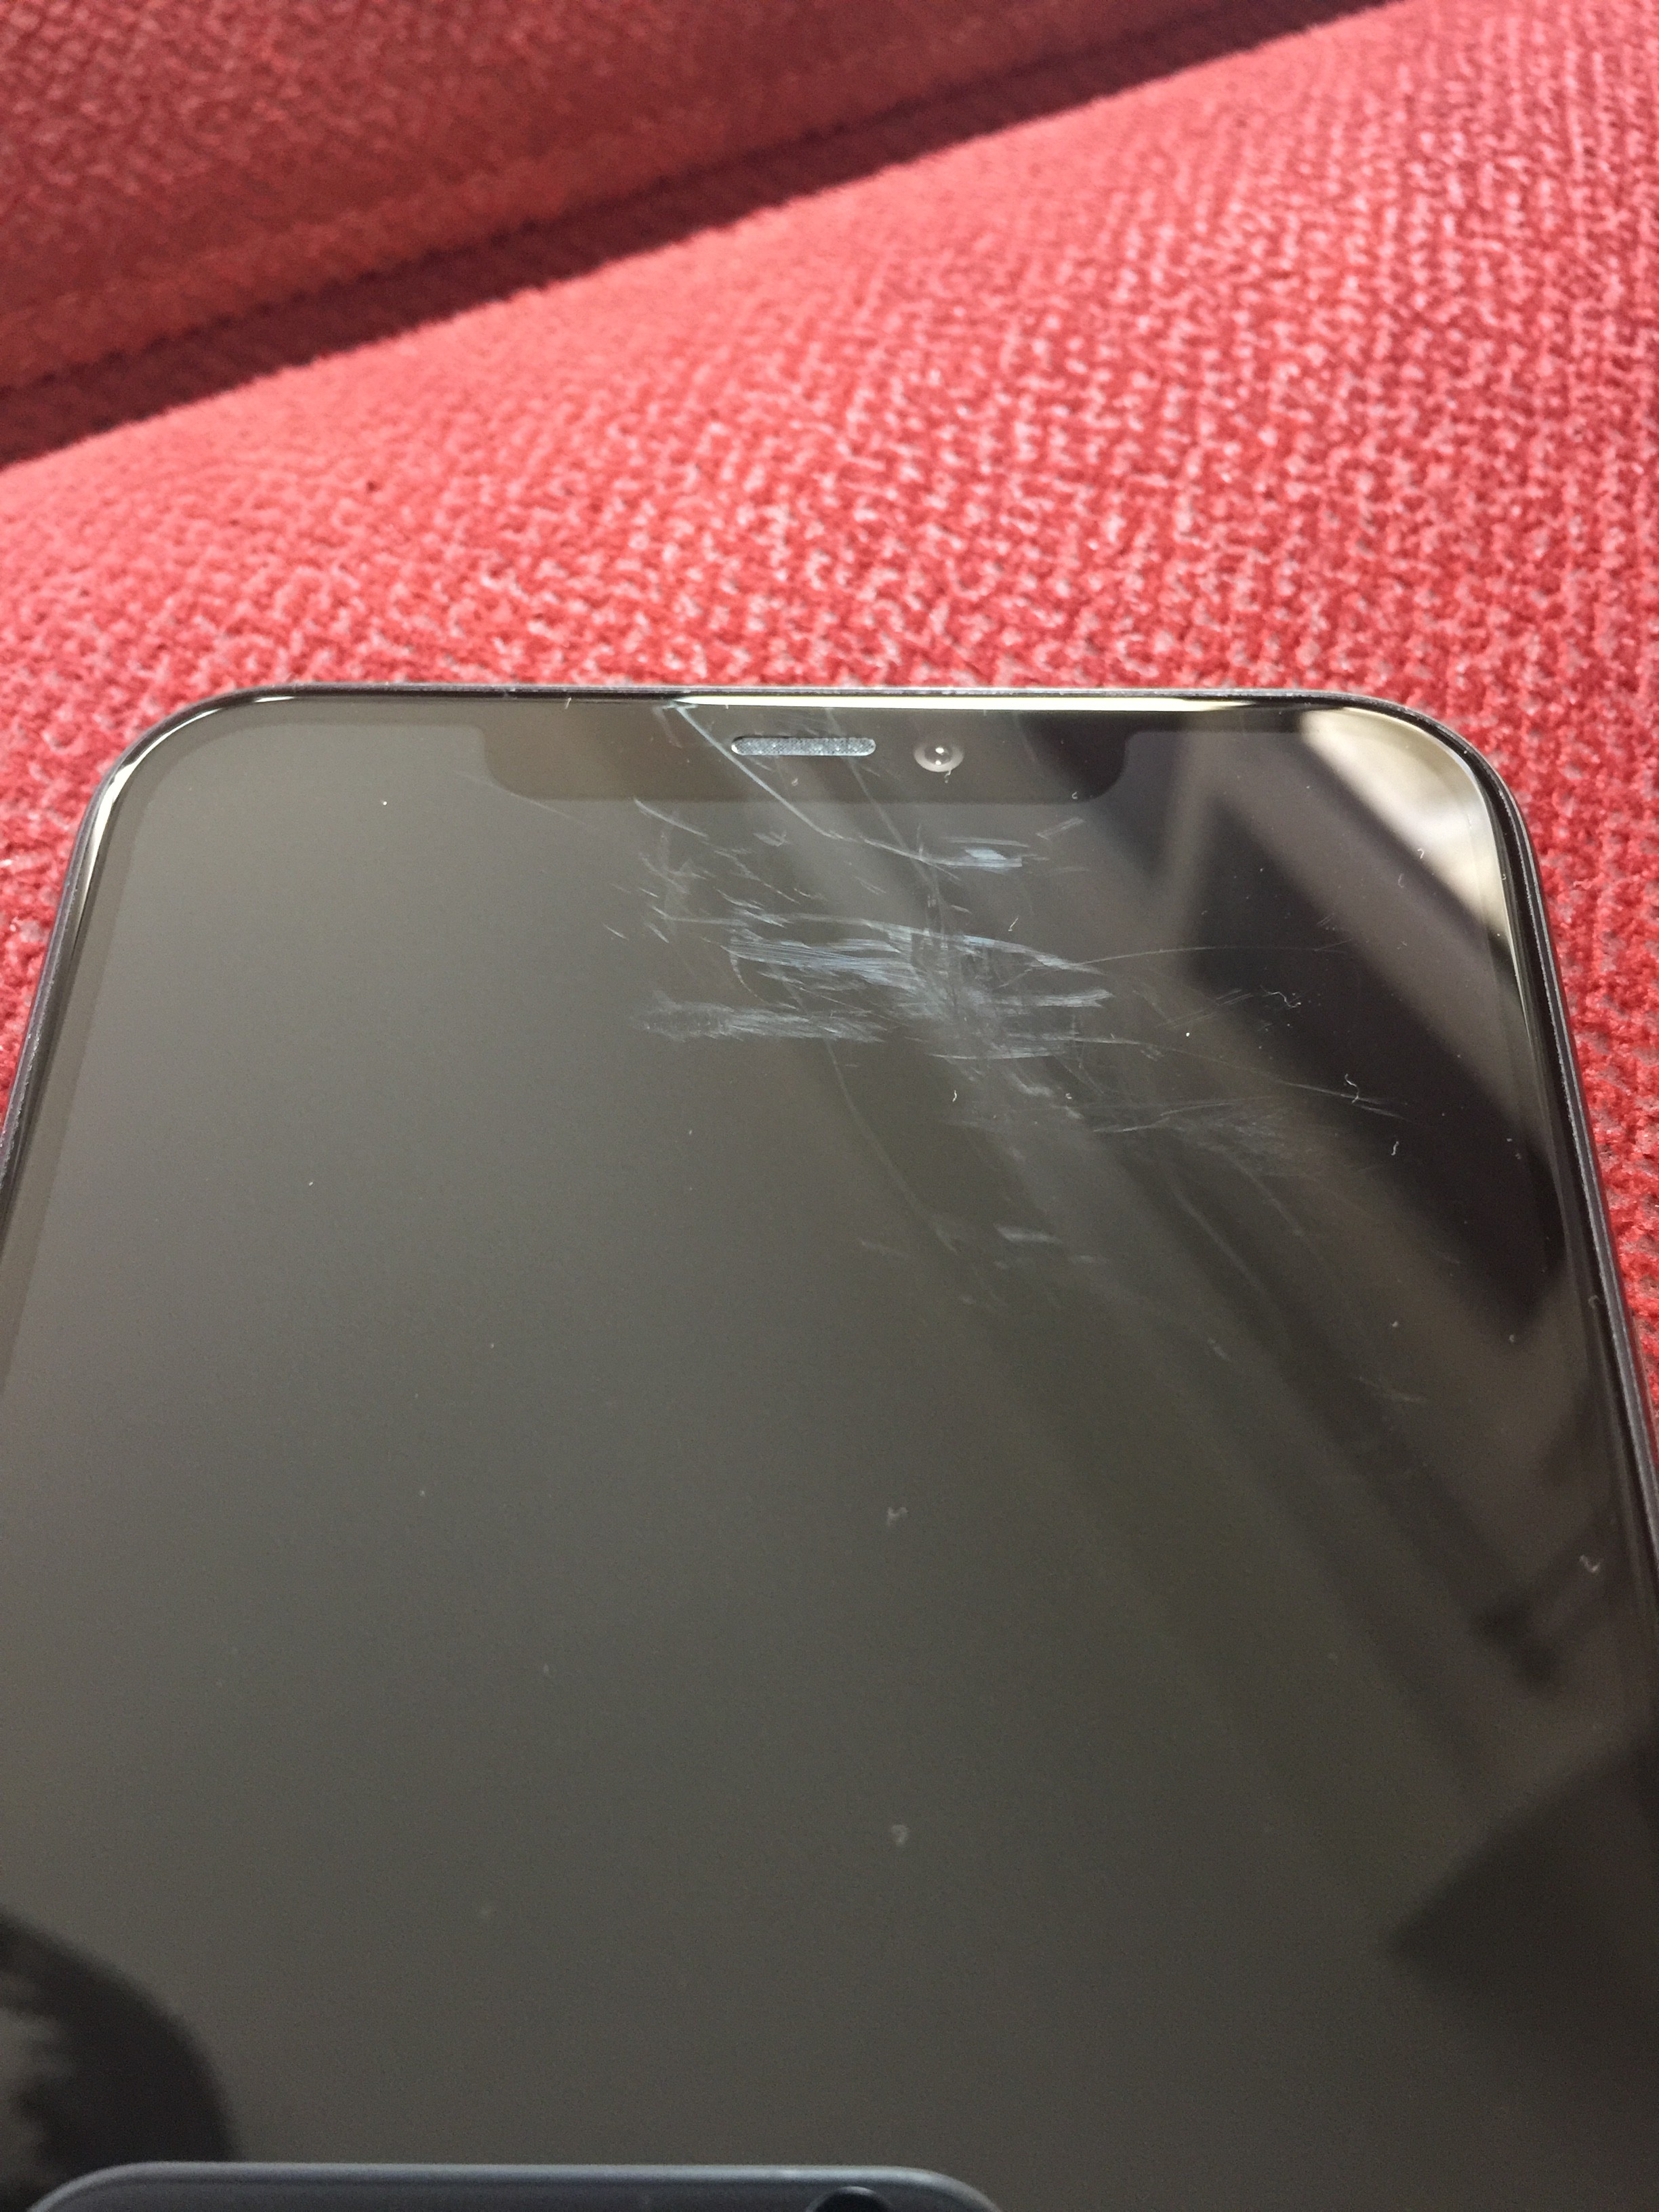 iPhone 13 Pro Max micro scratch on screen - Apple Community